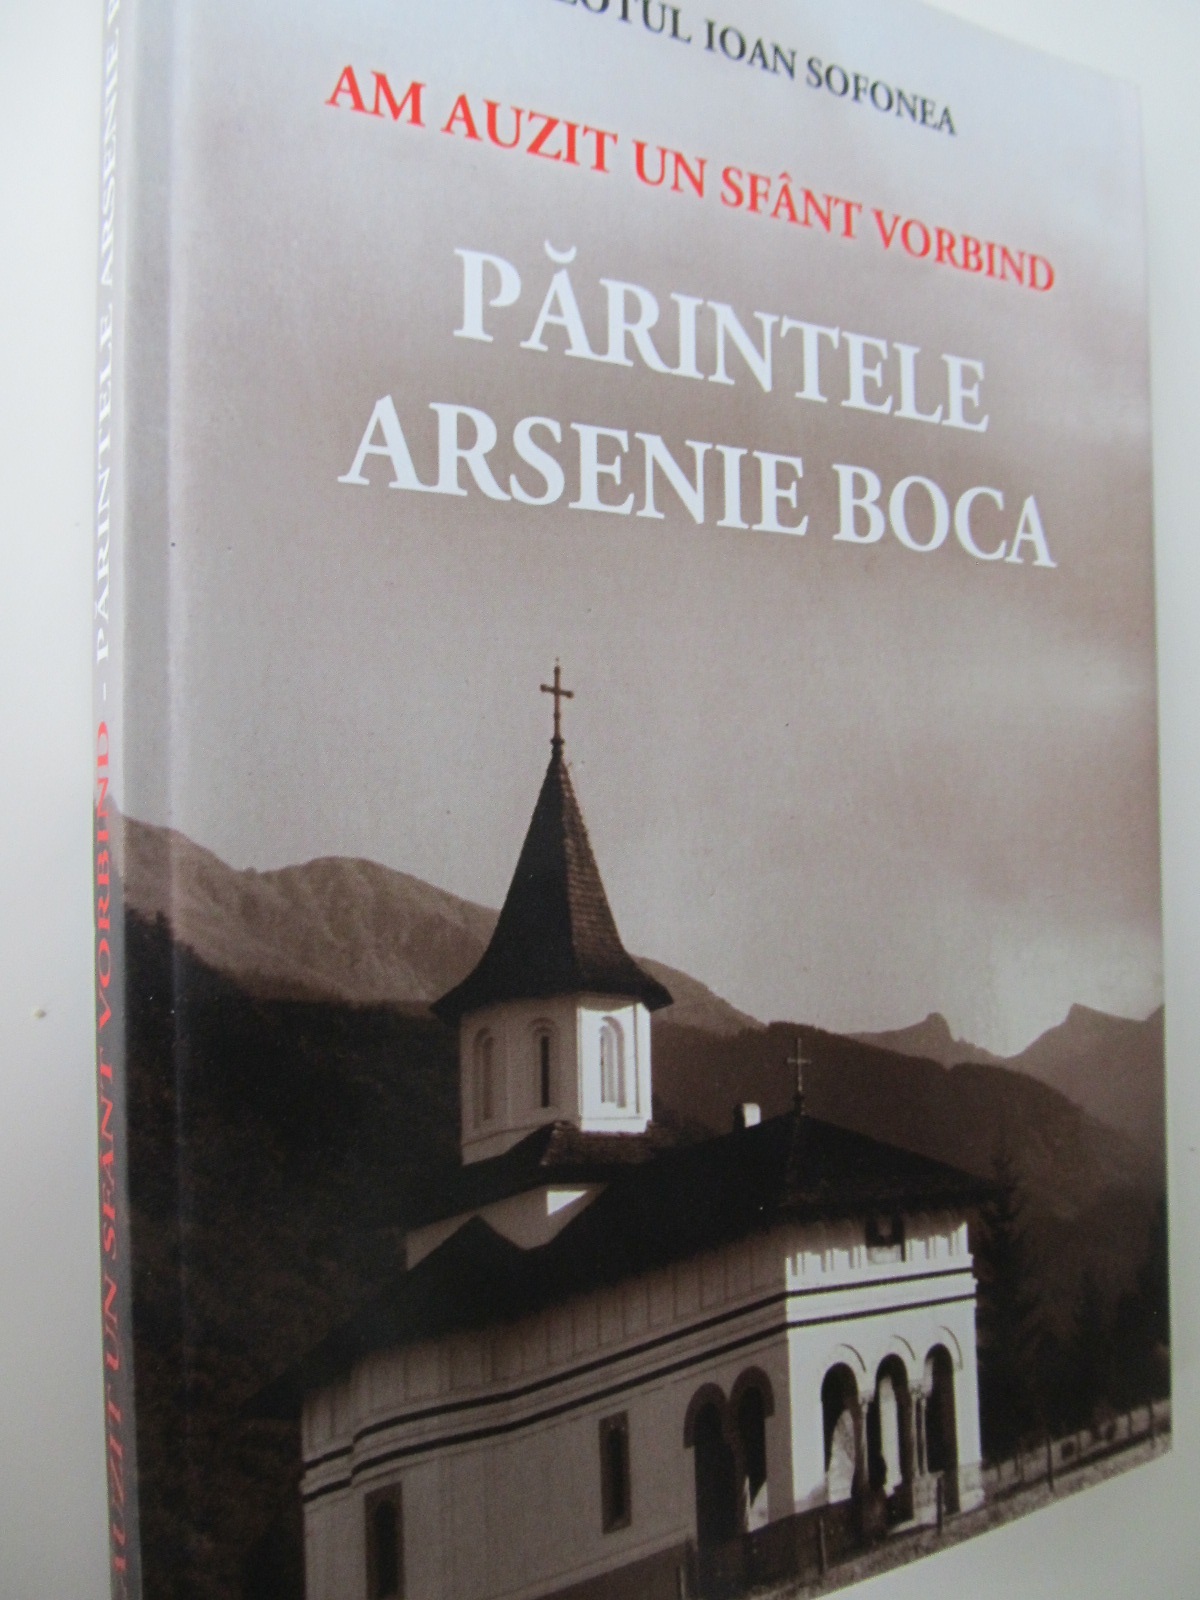 Am auzit un sfant vorbind - Parintele Arsenie Boca - Preotul Ioan Sofonea | Detalii carte